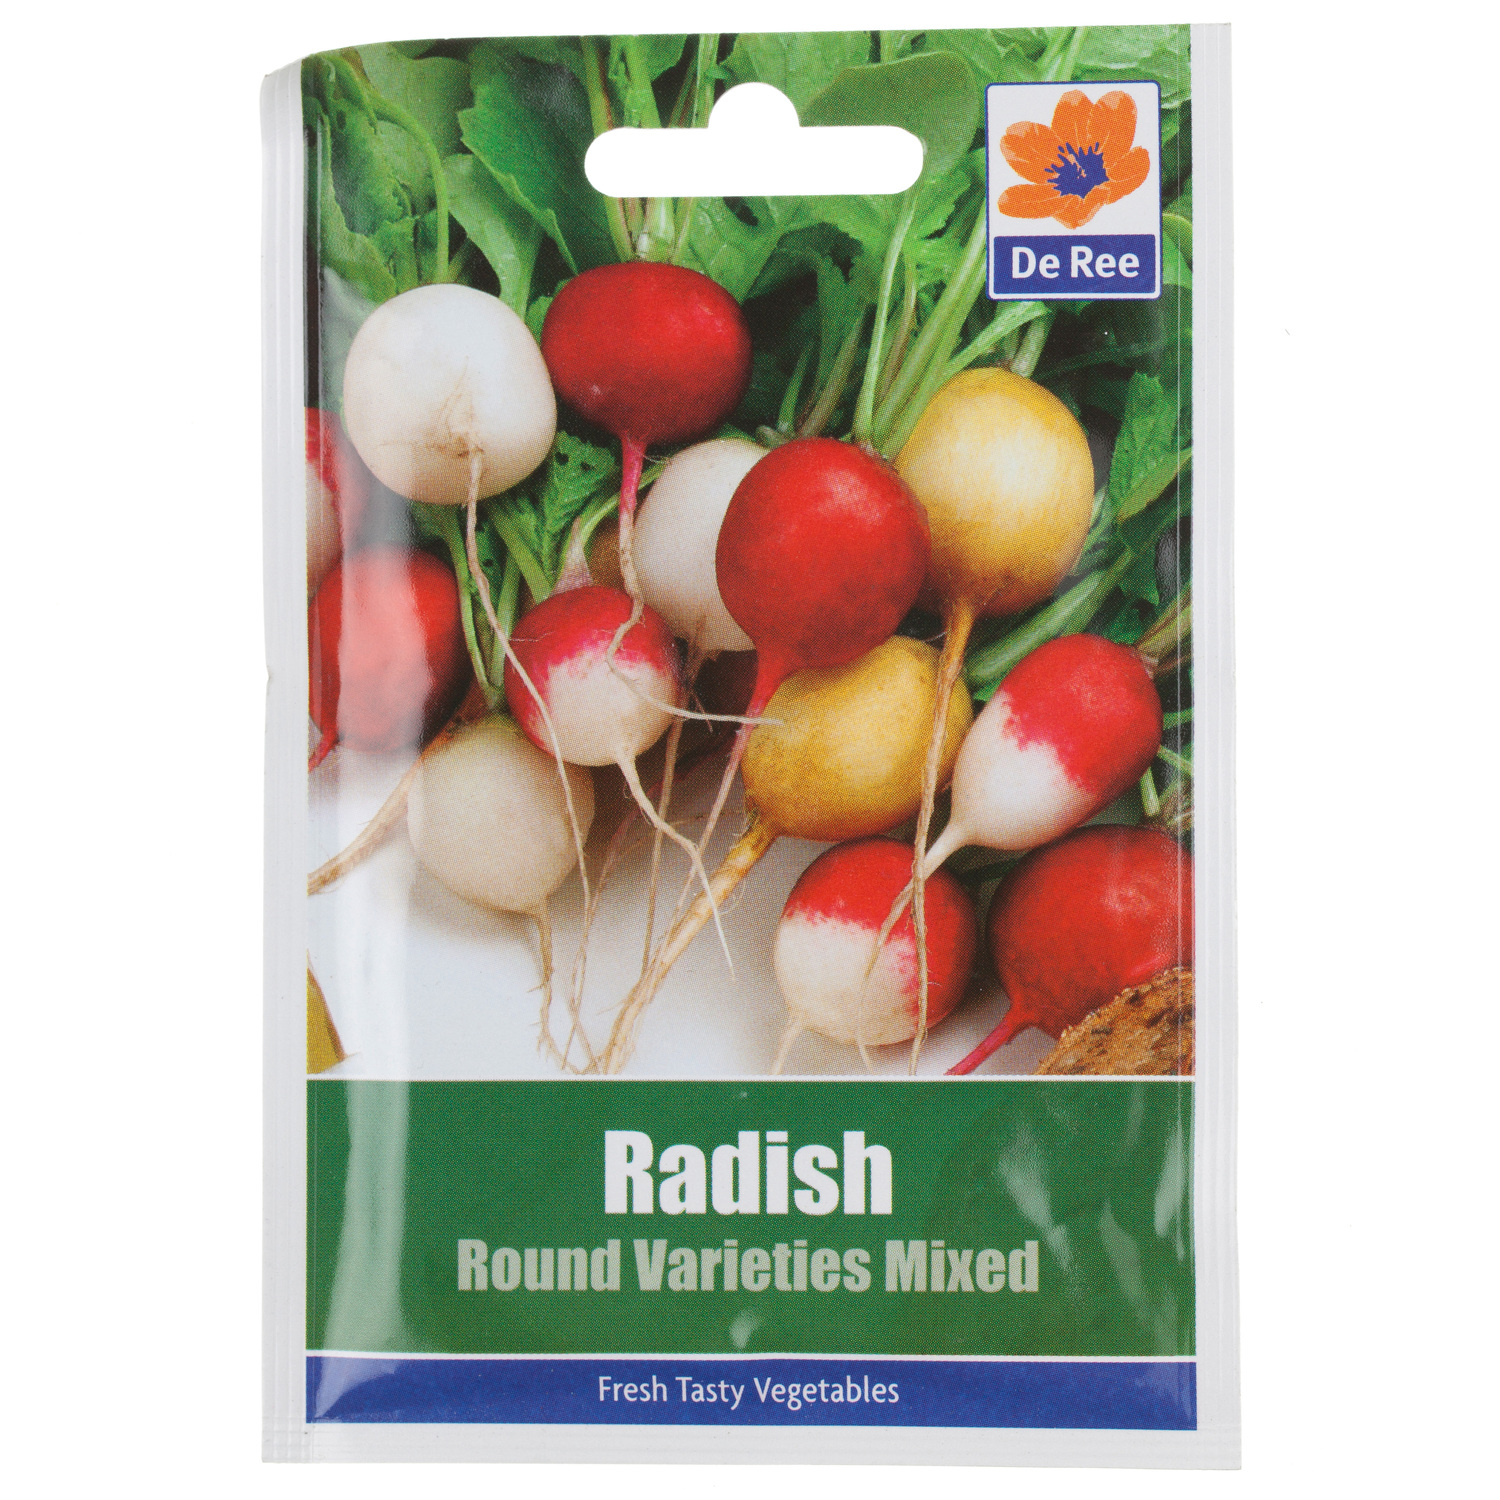 Mixed Radish Seed Packet Image